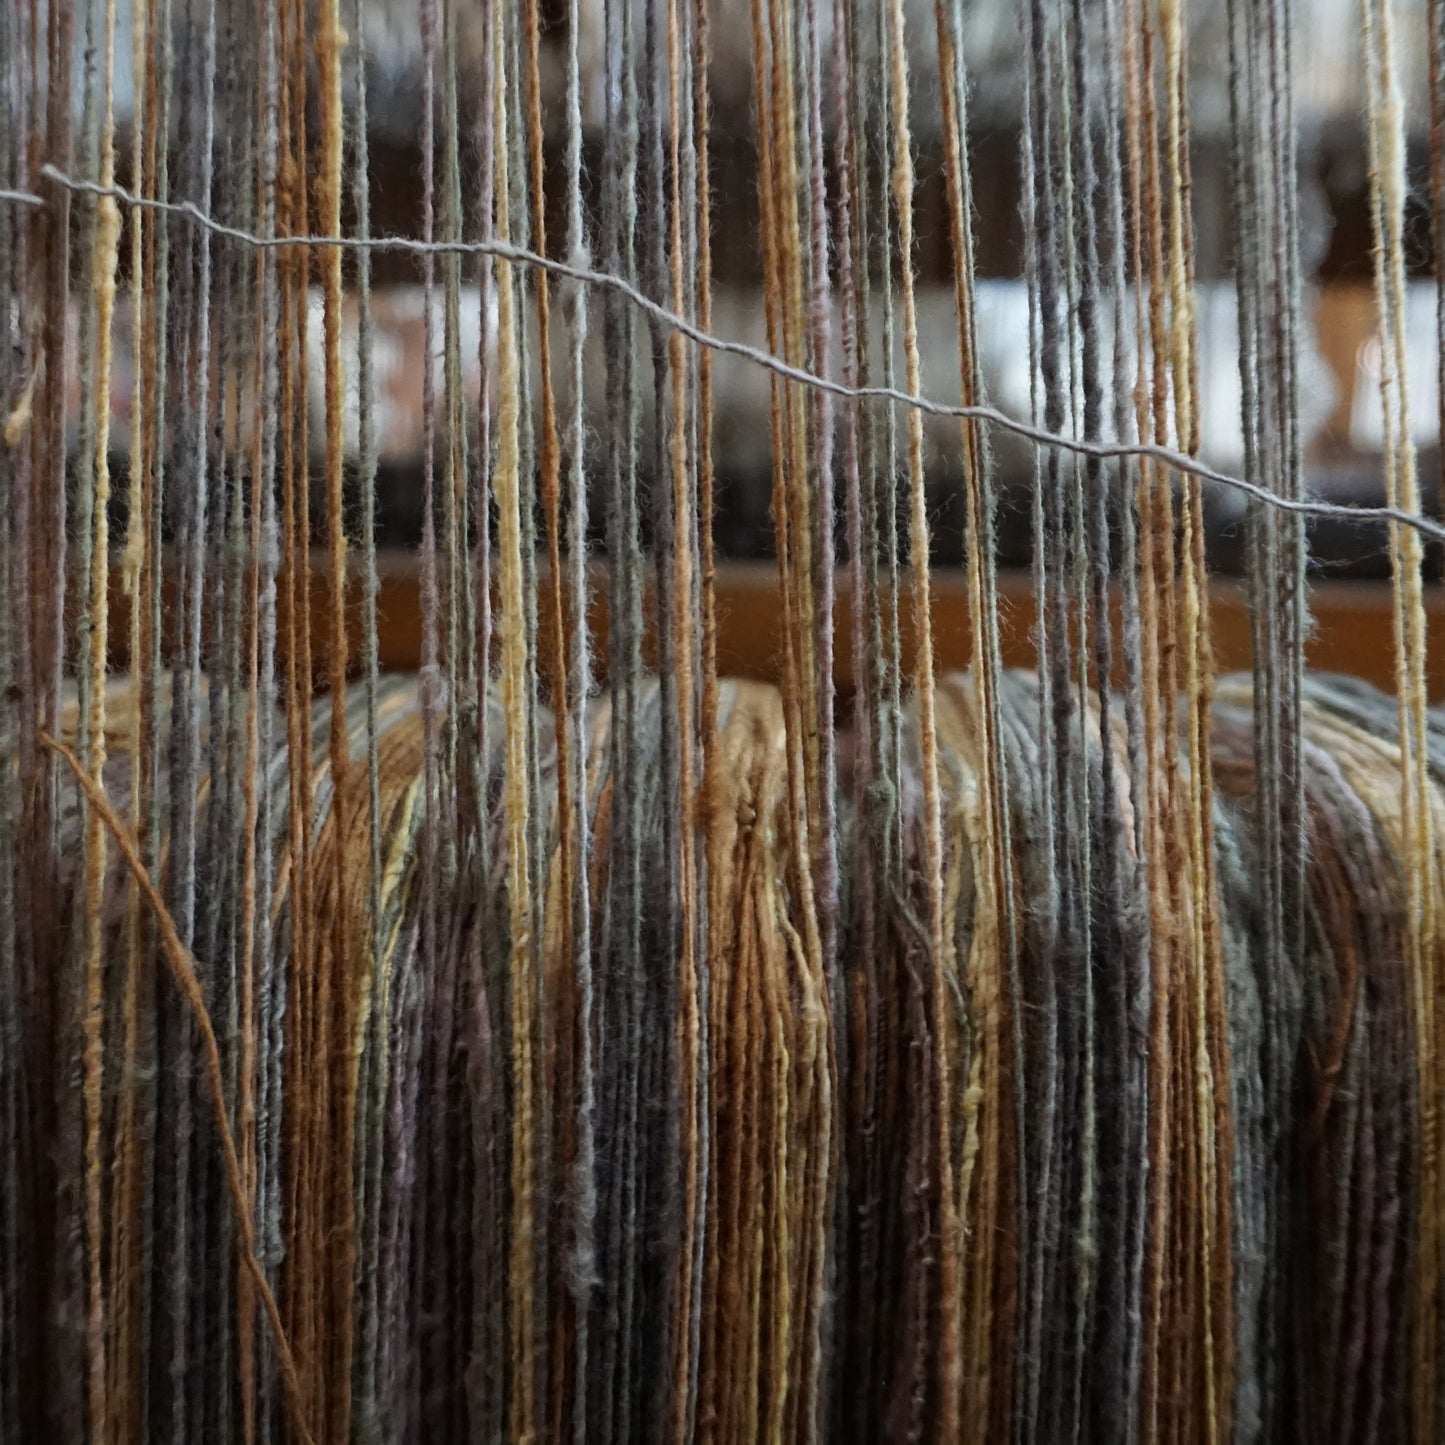 Colombia, Corpolienzo, Weaving